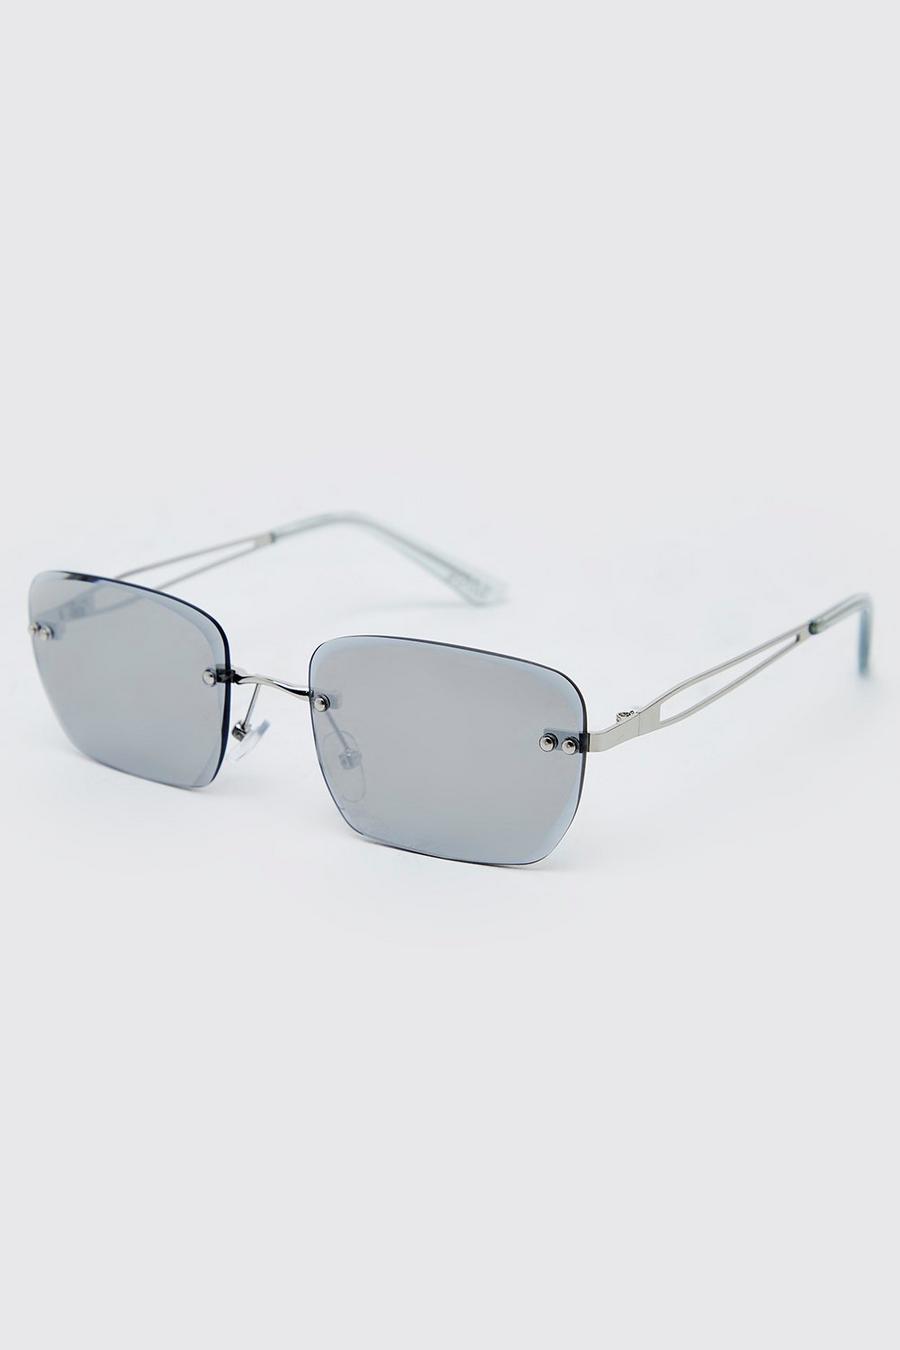 Silver Frameless Square Bevelled Metal Sunglasses